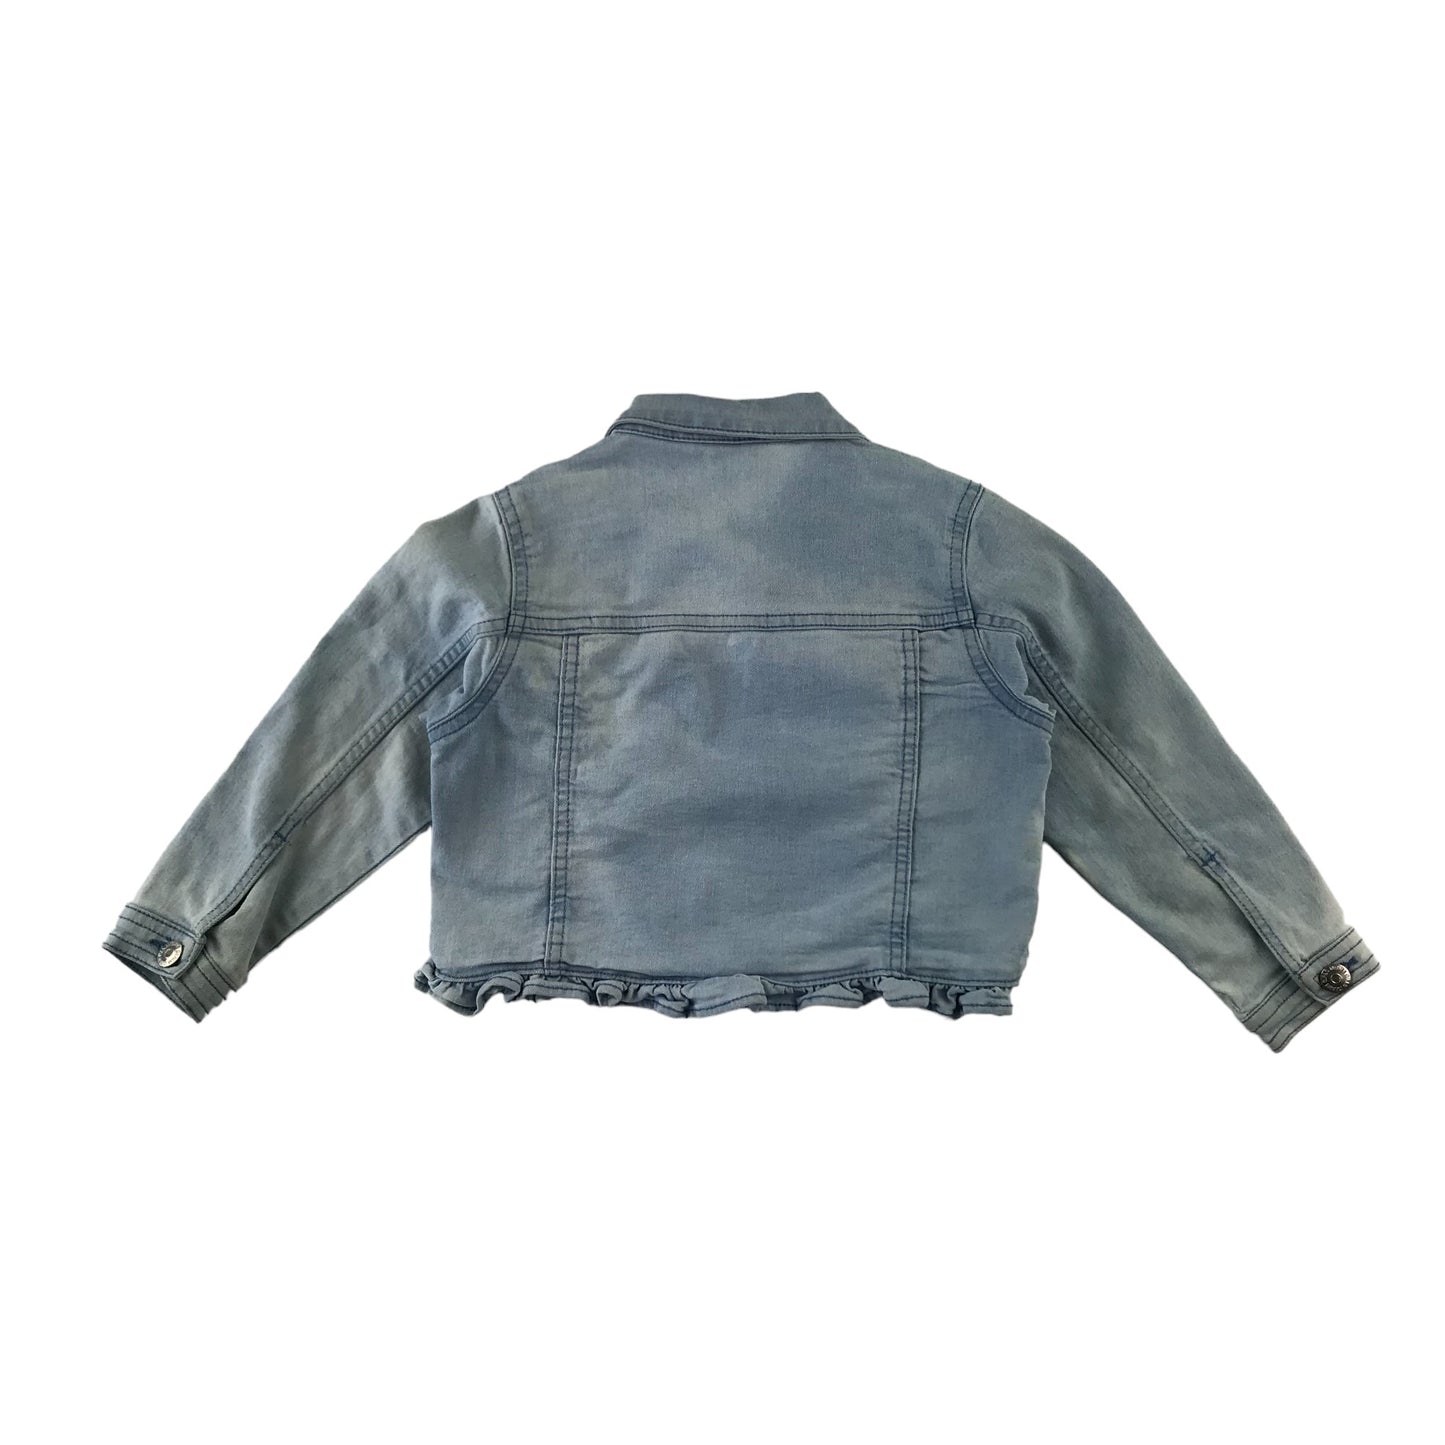 Matalan denim jacket 4-5 years light blue cropped frill hem